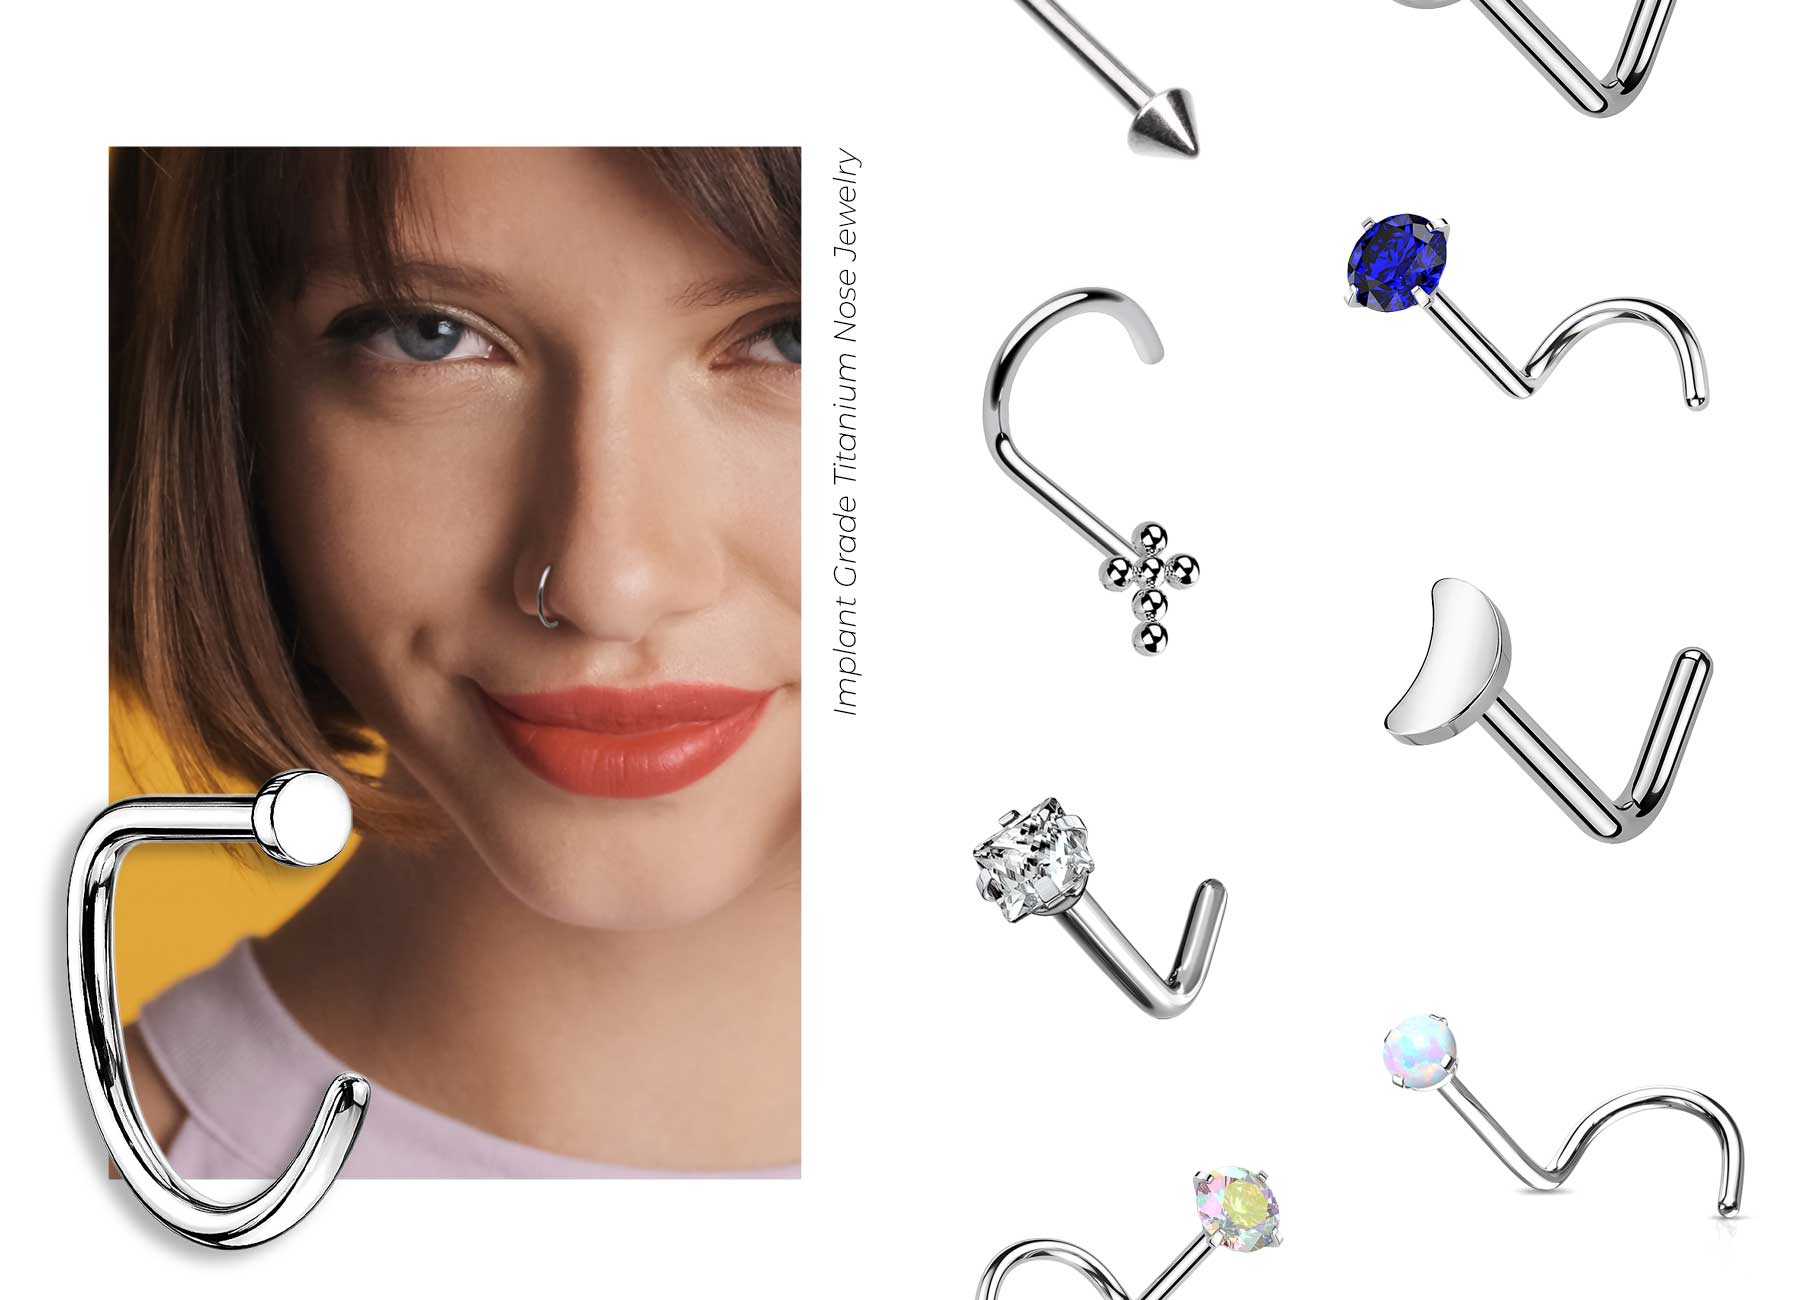 Decorative Nose Piercing Jewelry from BM25.com